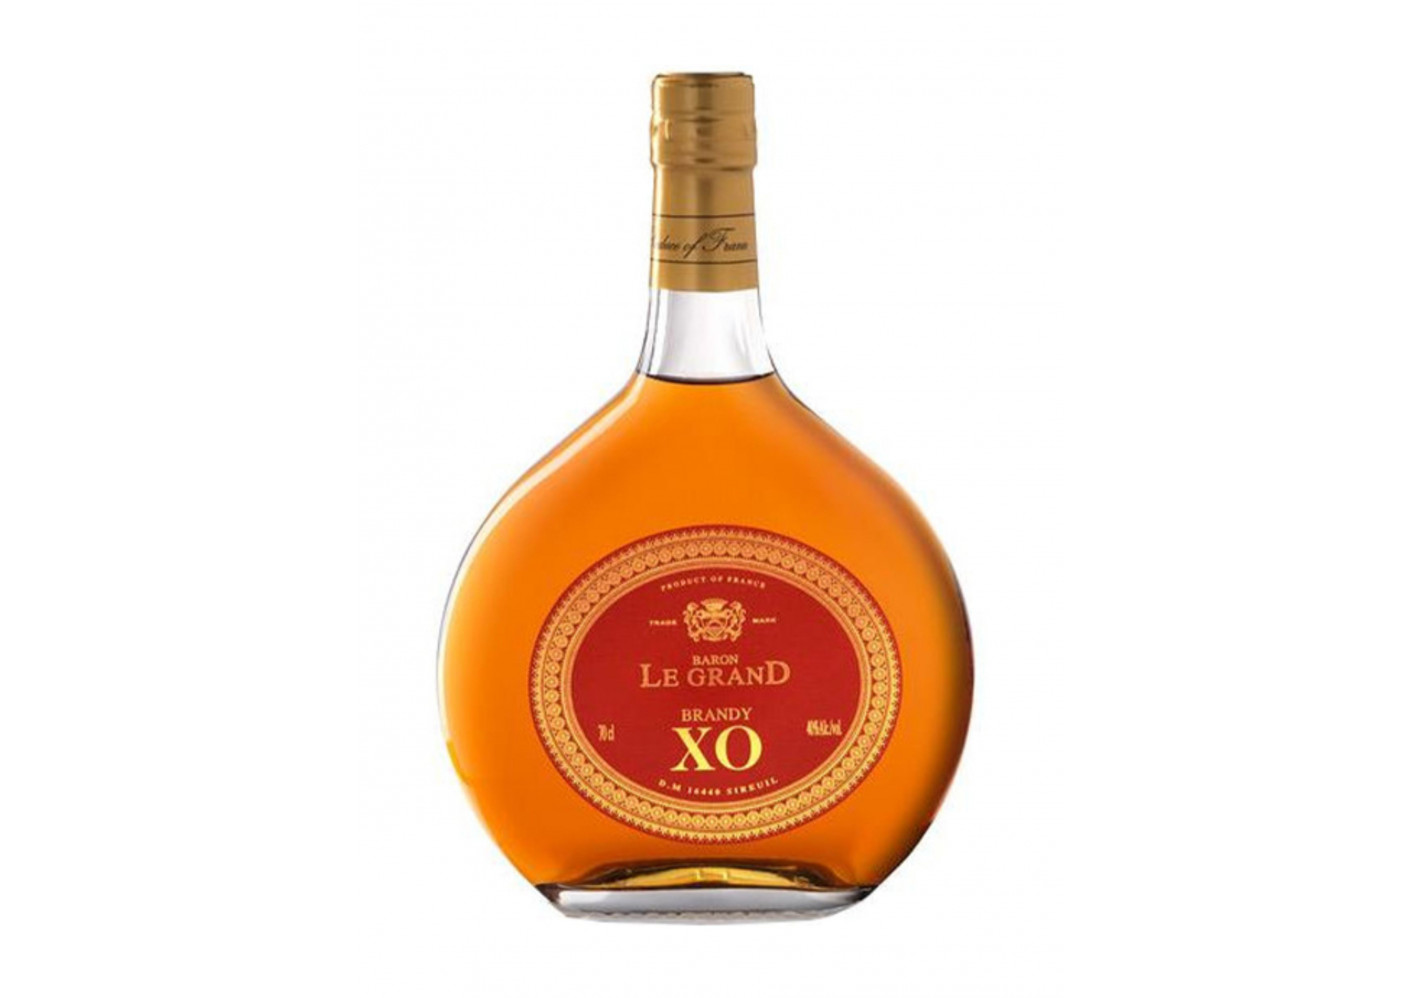 Spirit Of The Week: Omage XO California Brandy - Maxim